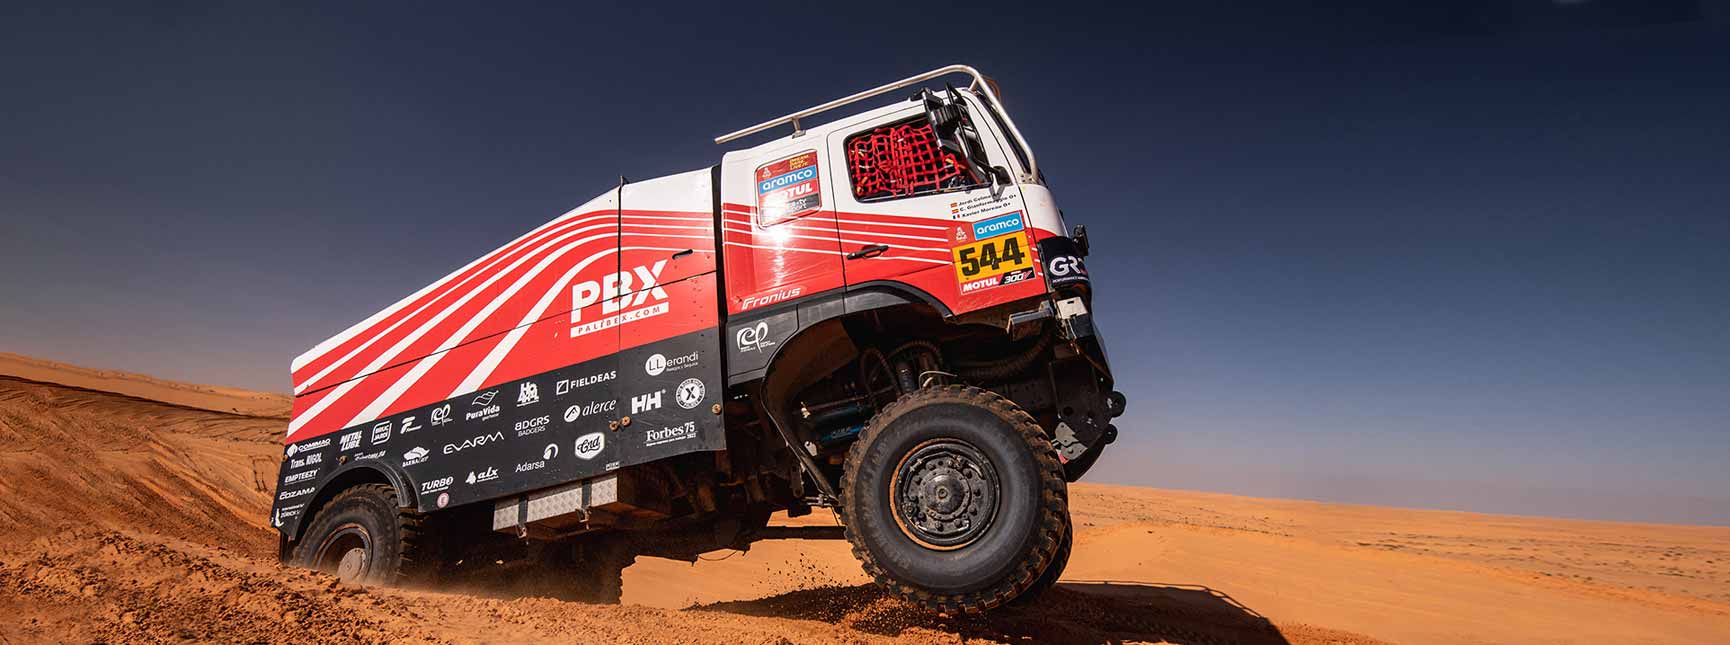 Camiones todoterreno - camion dakar - camion dunas desierto - pbx dakar team - palibex